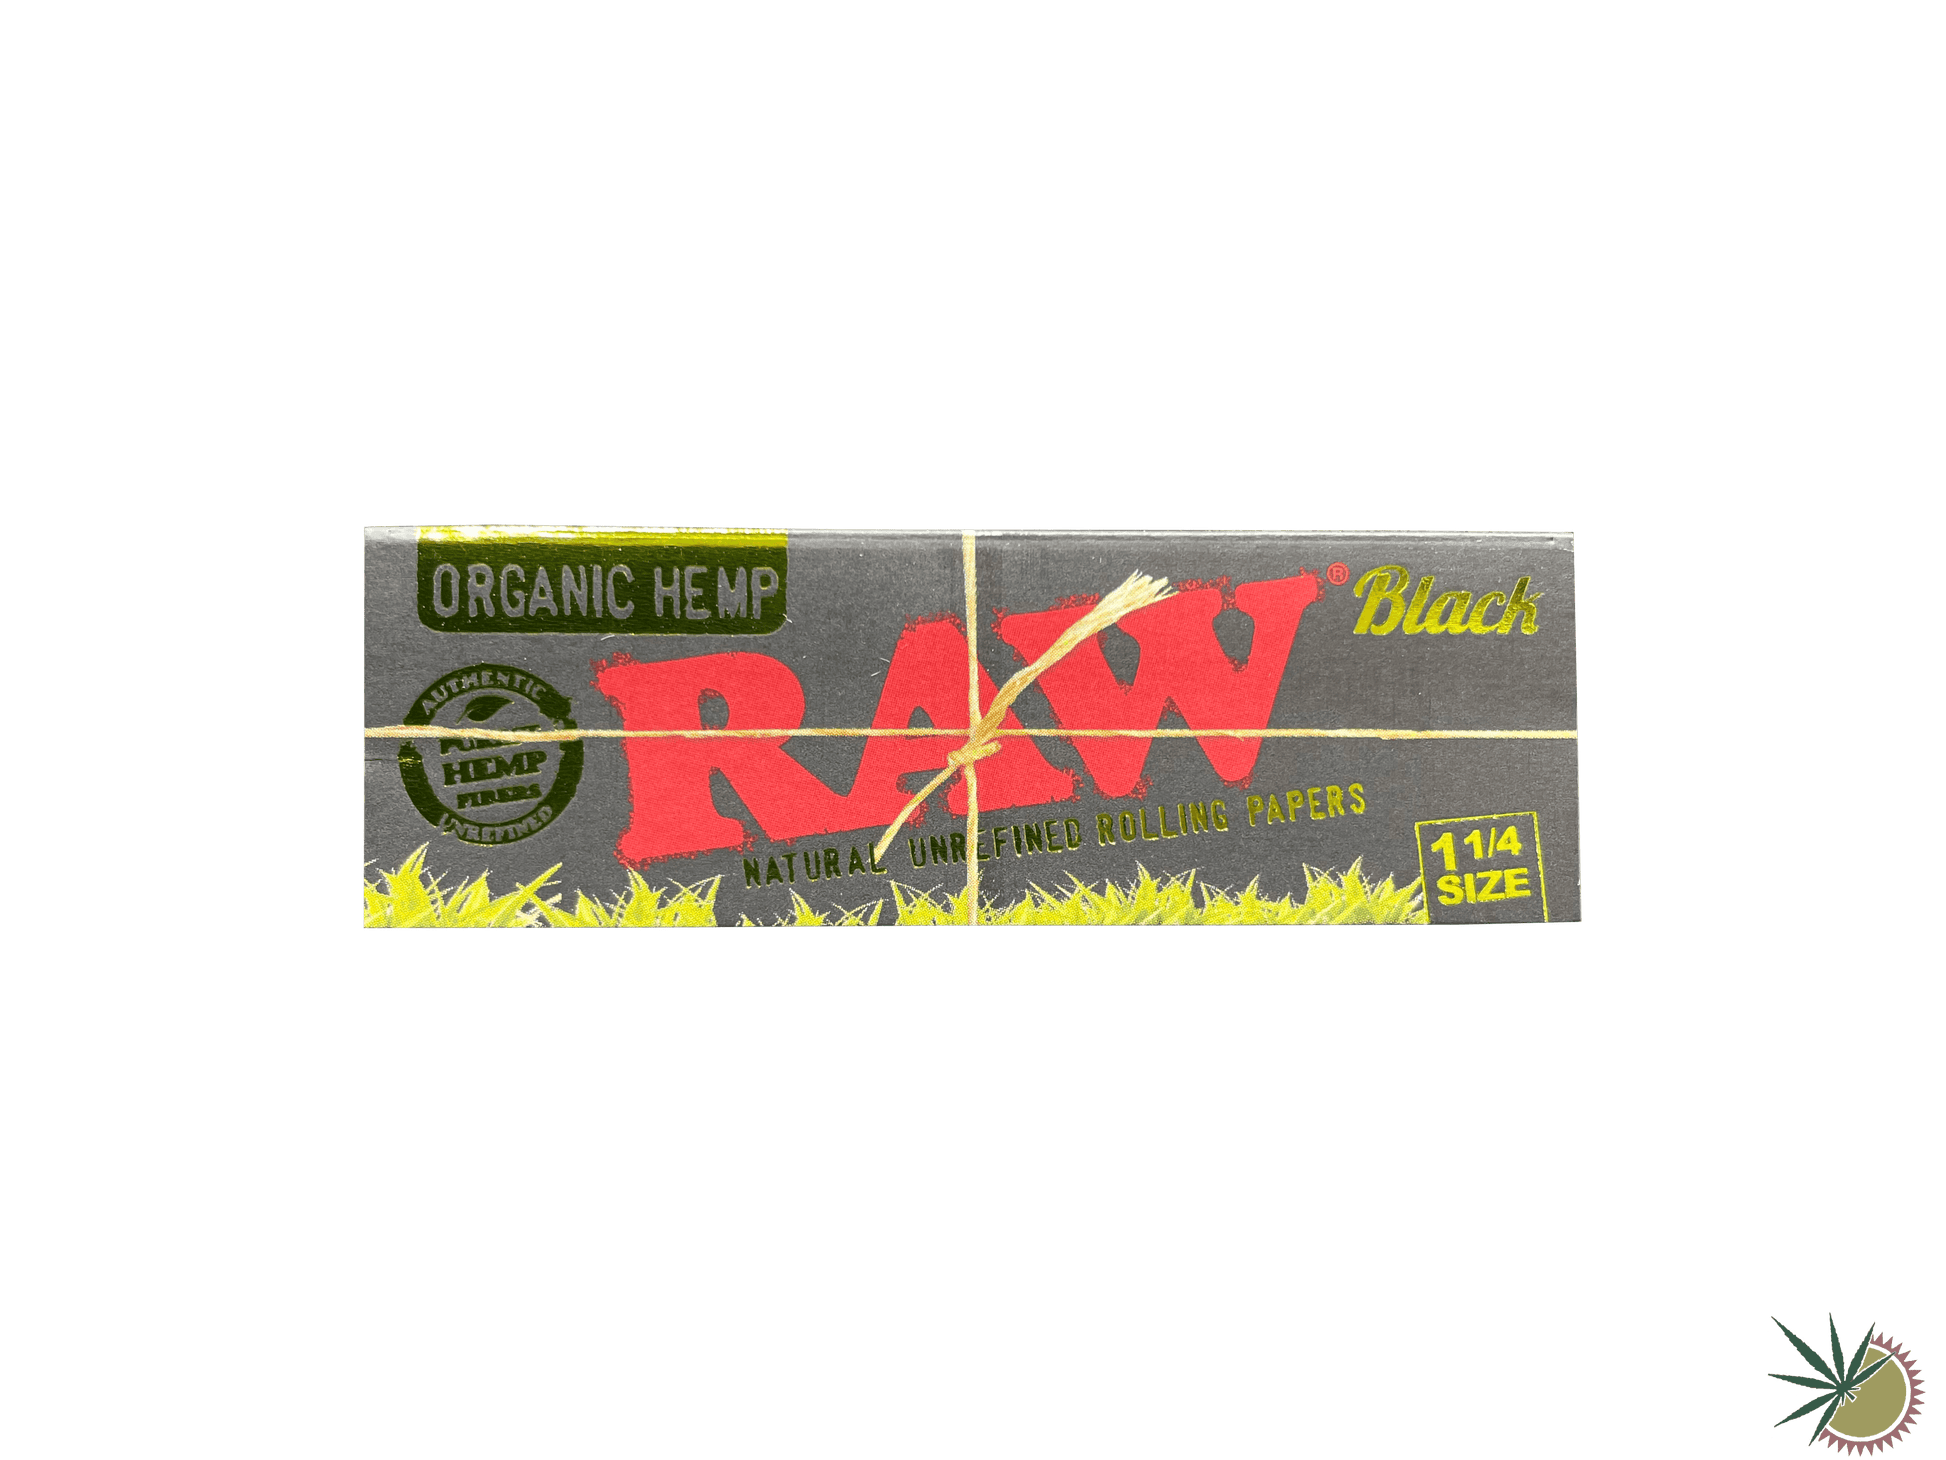 1 1/4 Papers Queen Size Slim RAW Organic Hemp Black aus Hanf - THC Headshop